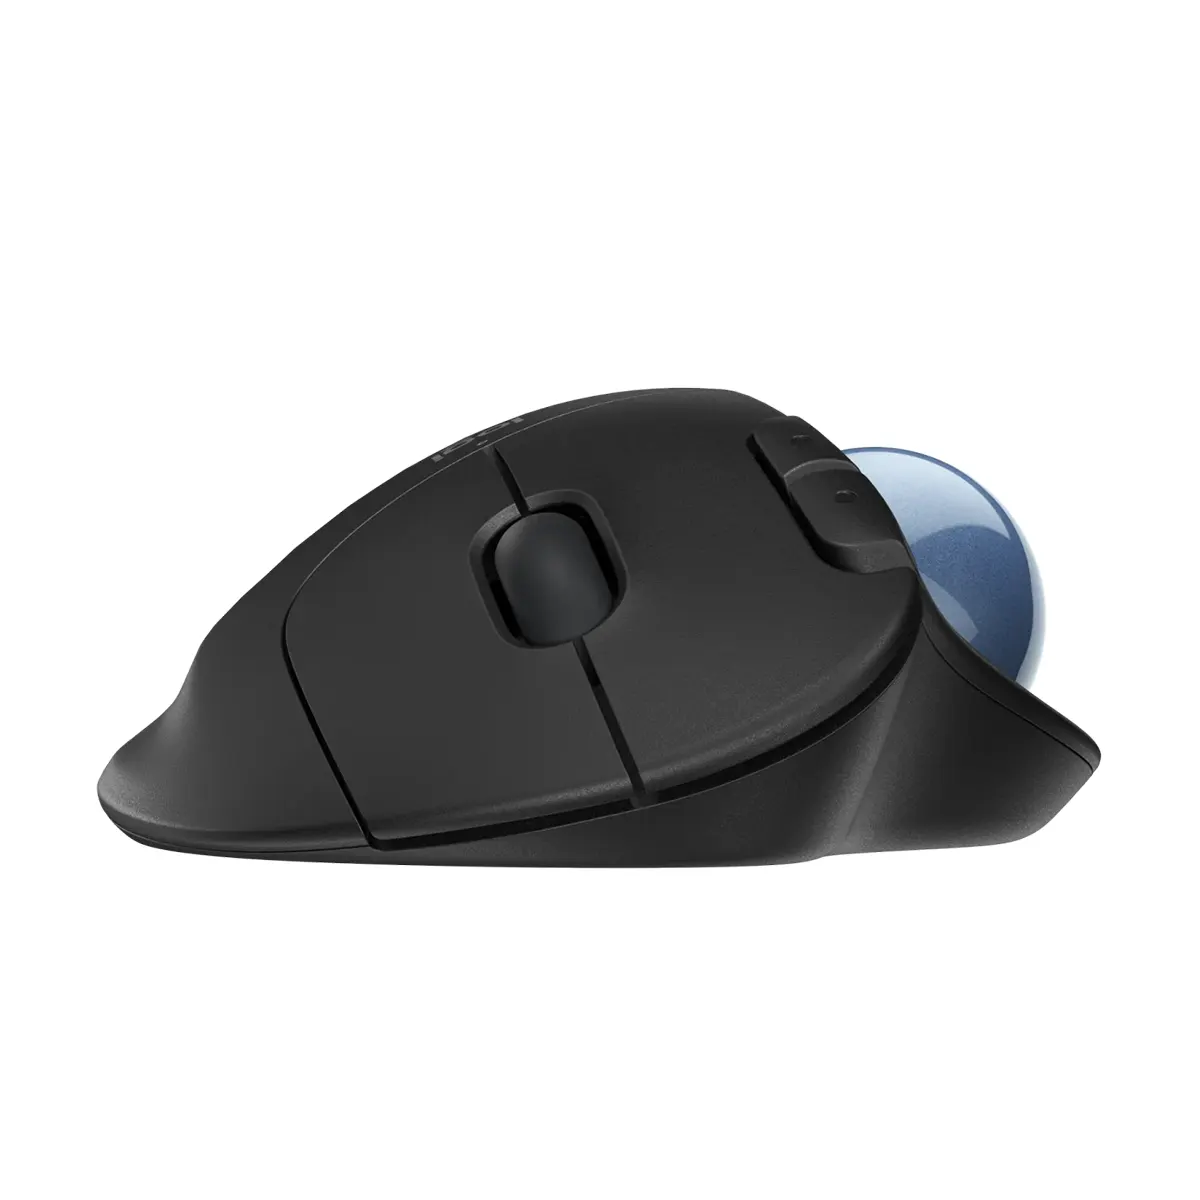 موس توپی بی سیم لاجیتک مدل Logitech ERGO M575 Wireless Trackball Mouse رنگ مشکی